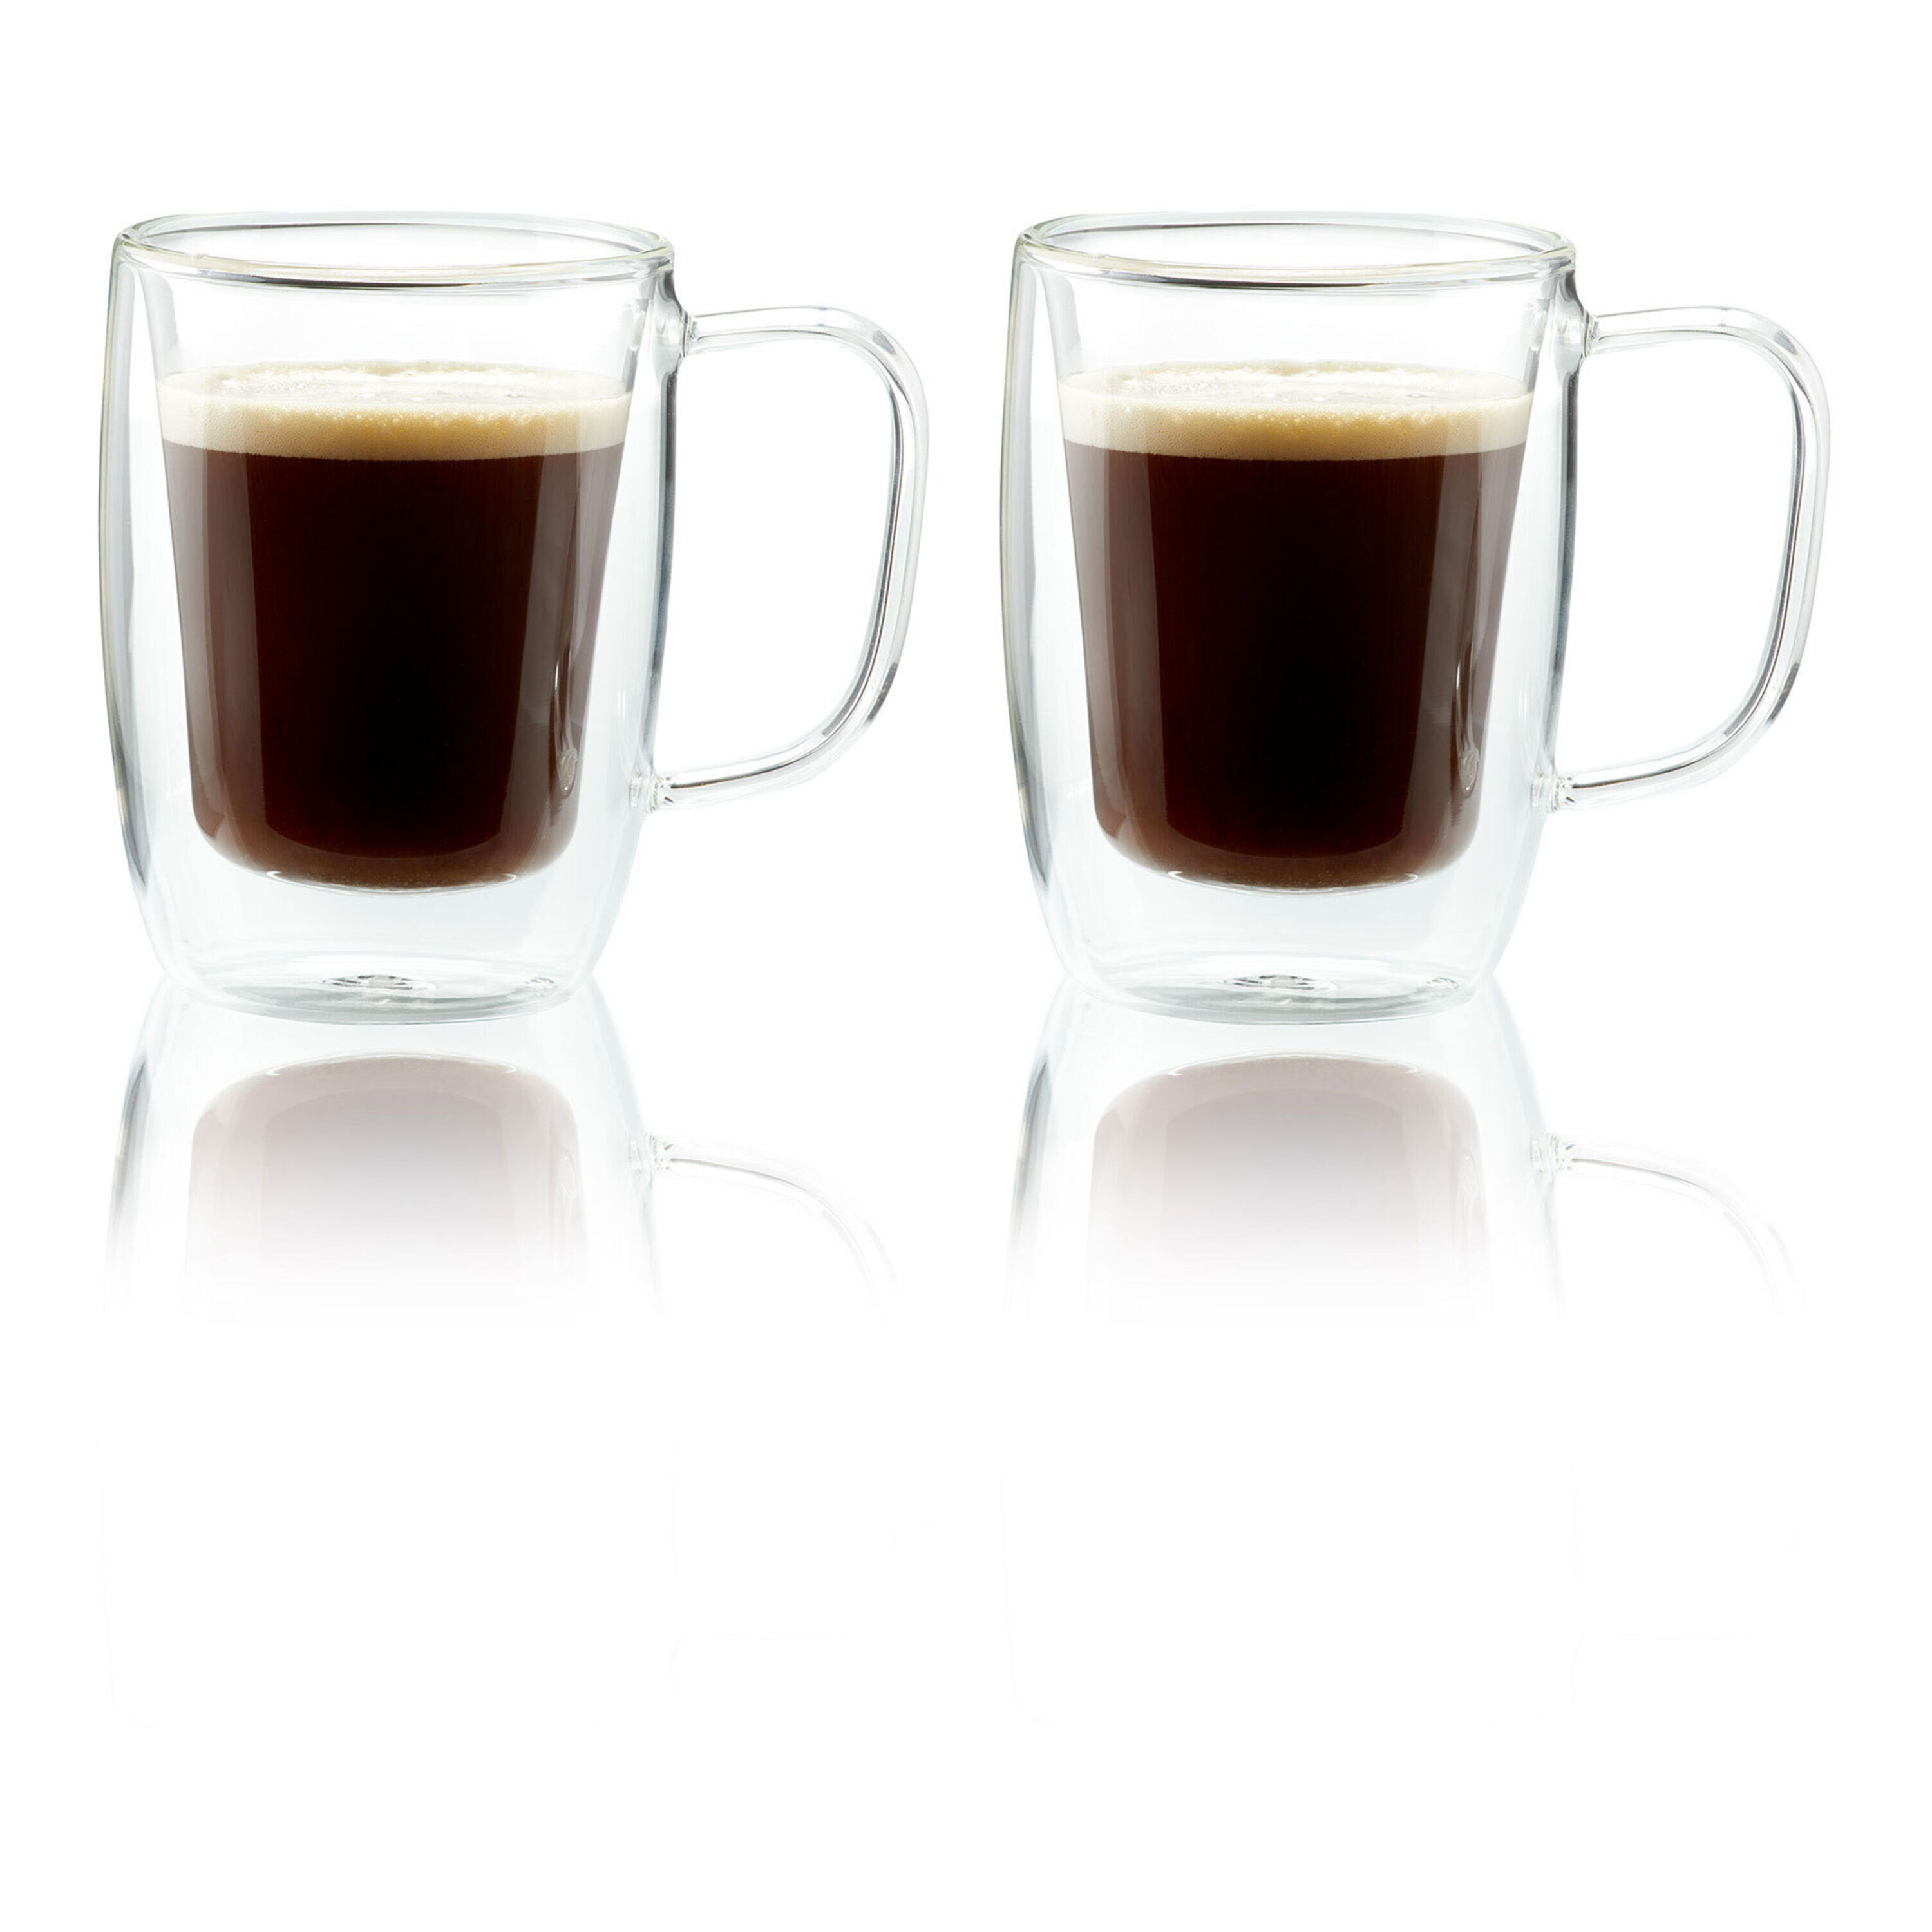 ZWILLING Sorrento Plus 4.5-oz Espresso Glass Mug Set of 2 